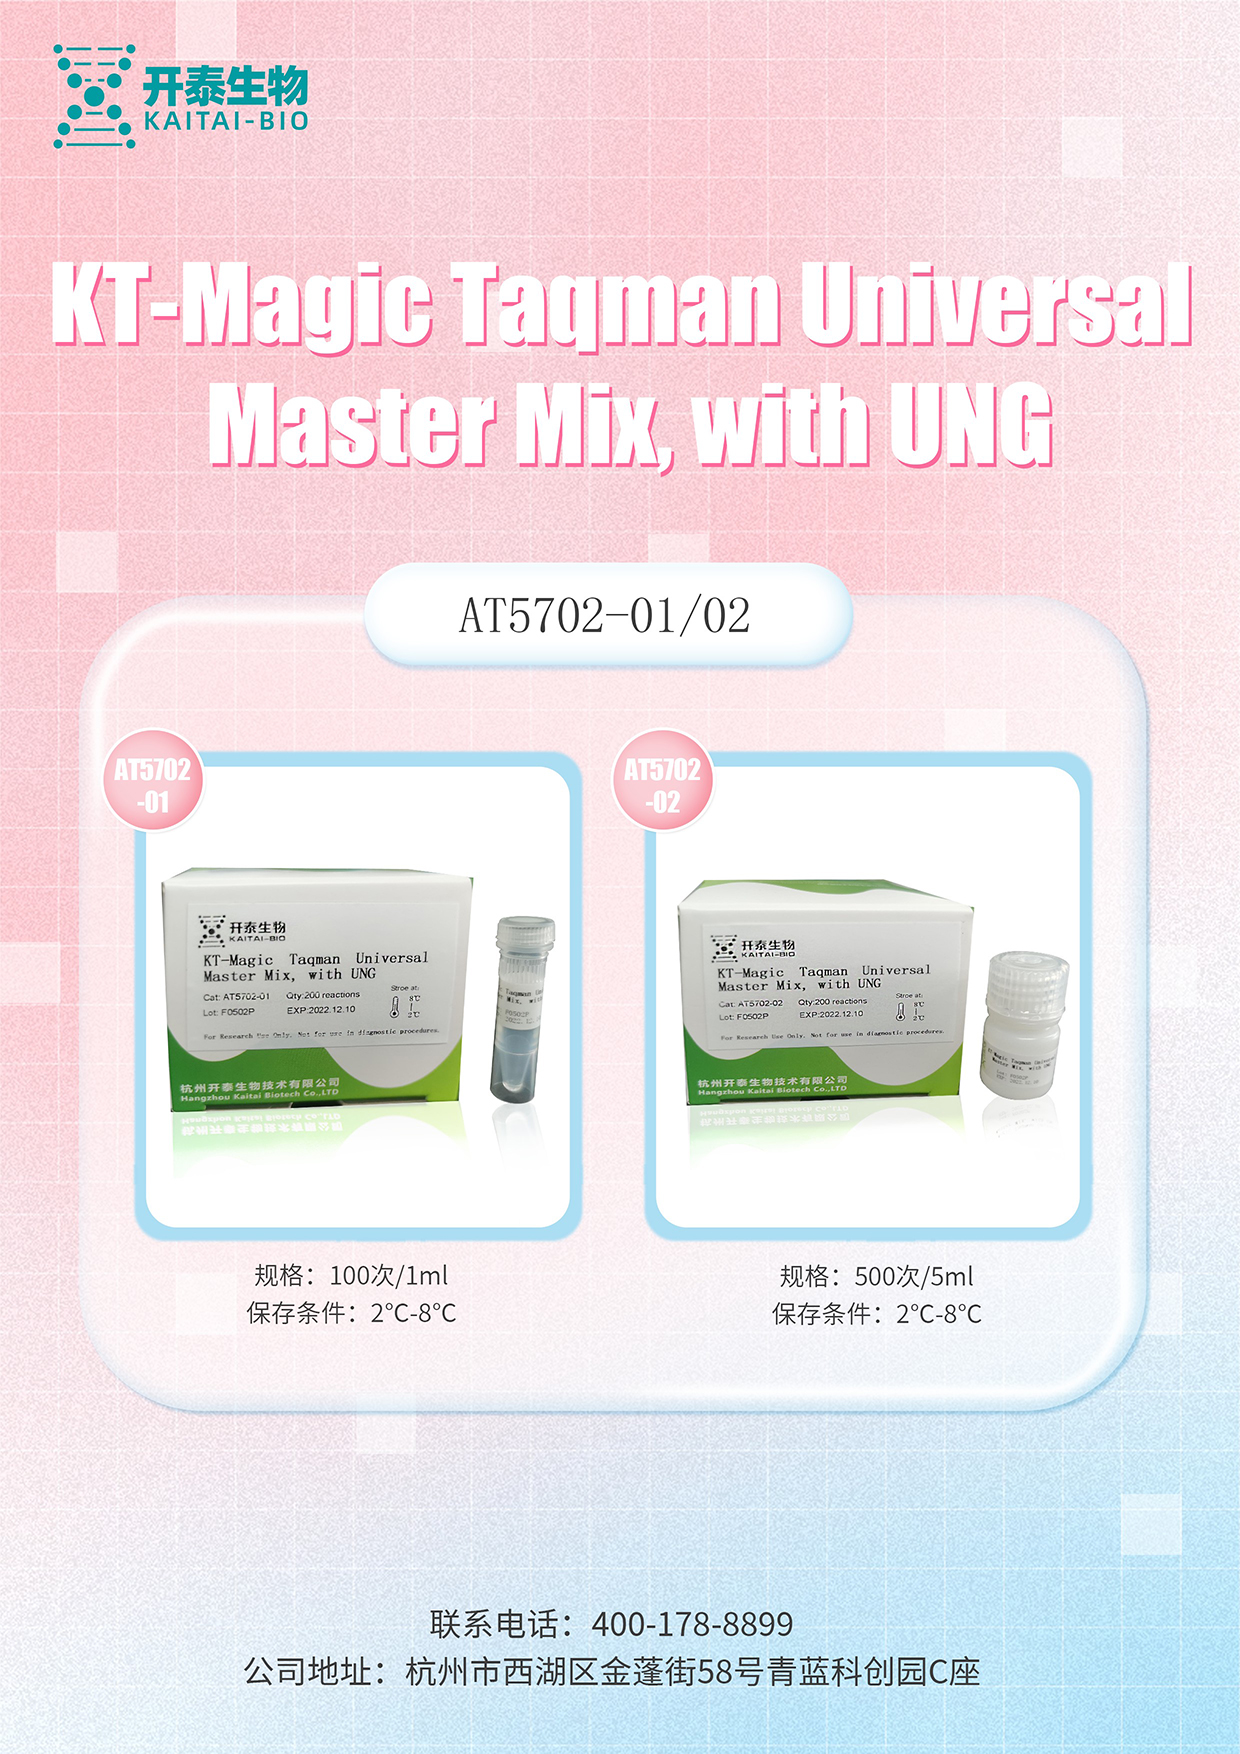 AT5702 KT-Magic Taqman Universal Master 